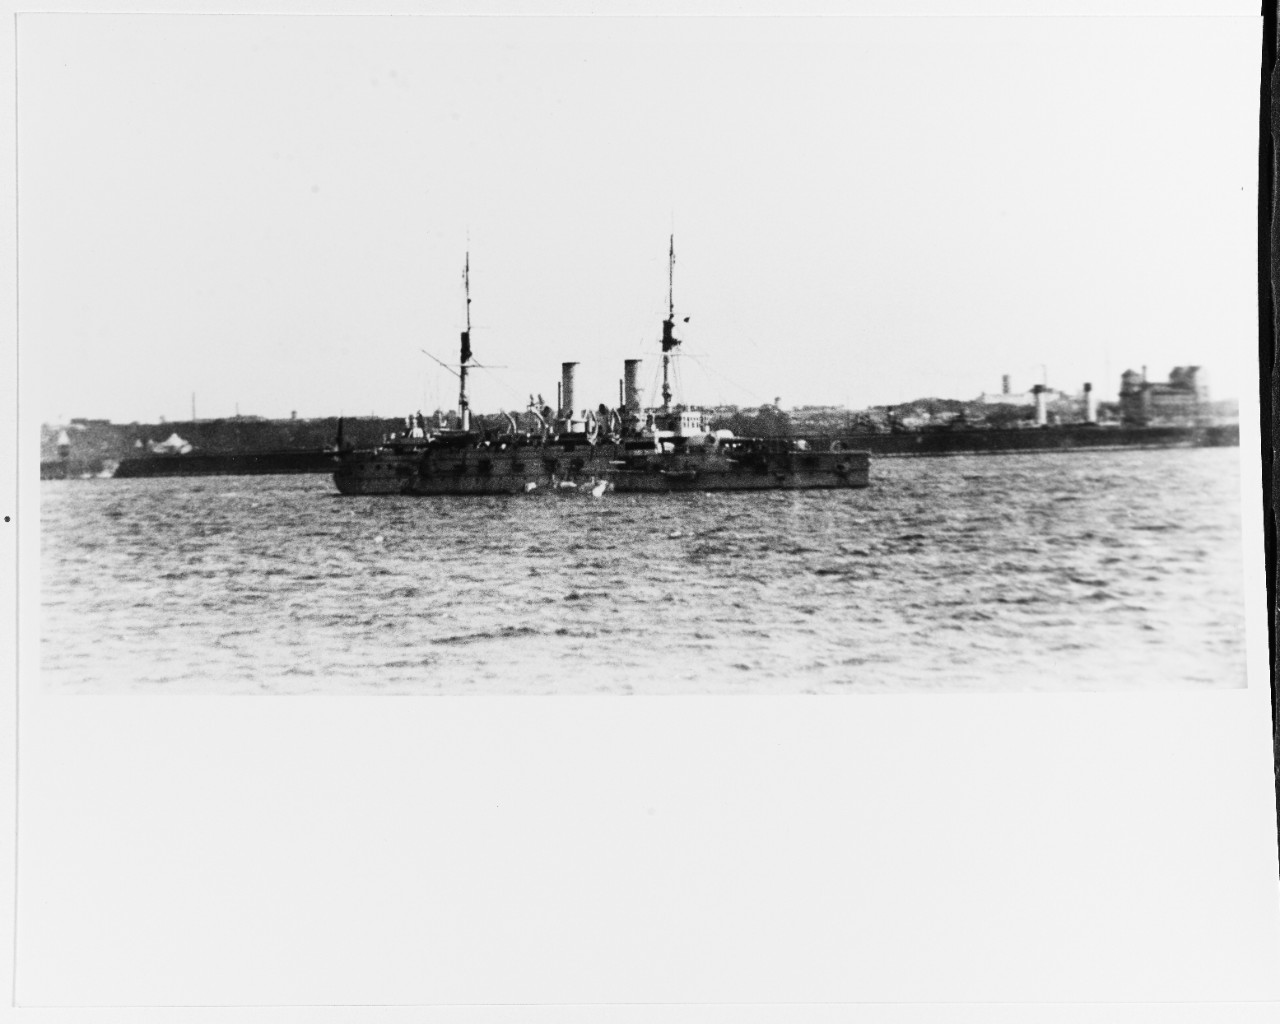 IMperator ALEKSANDR II (Russian Battleship, 1887-1922)